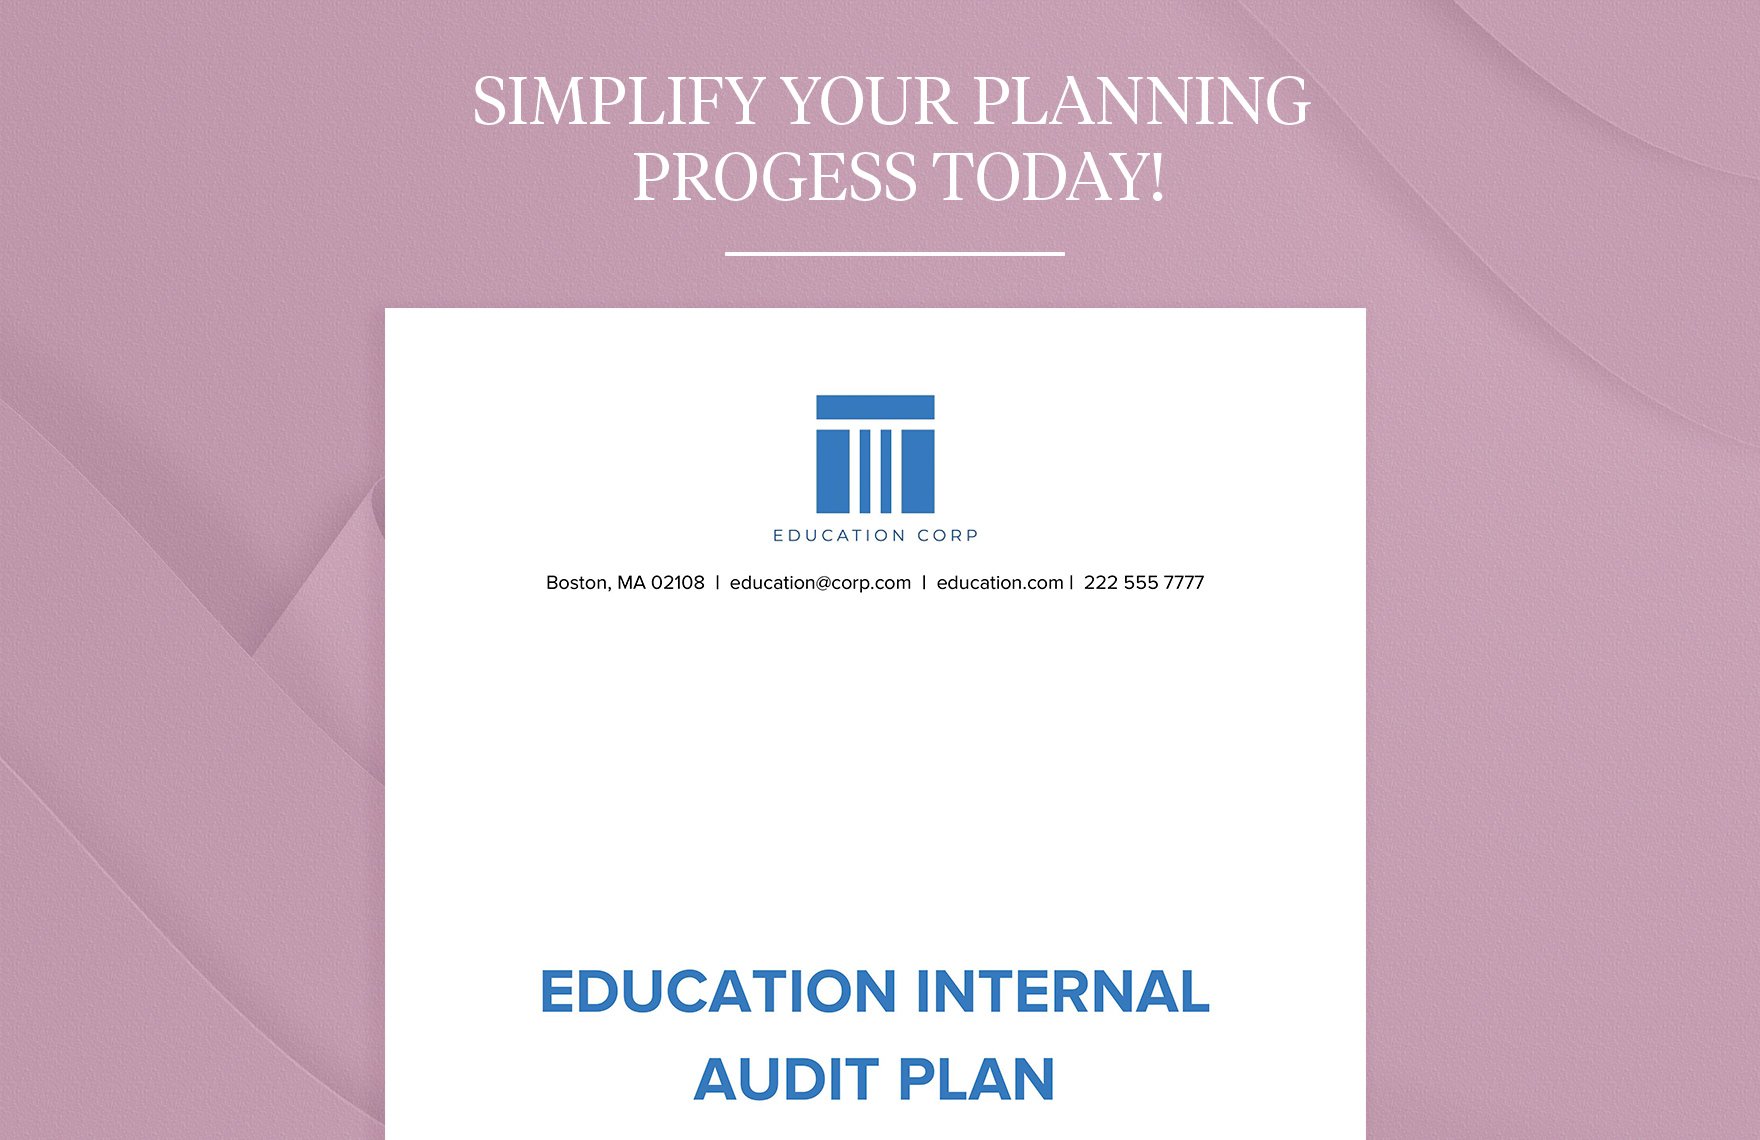 Education Internal Audit Plan Template